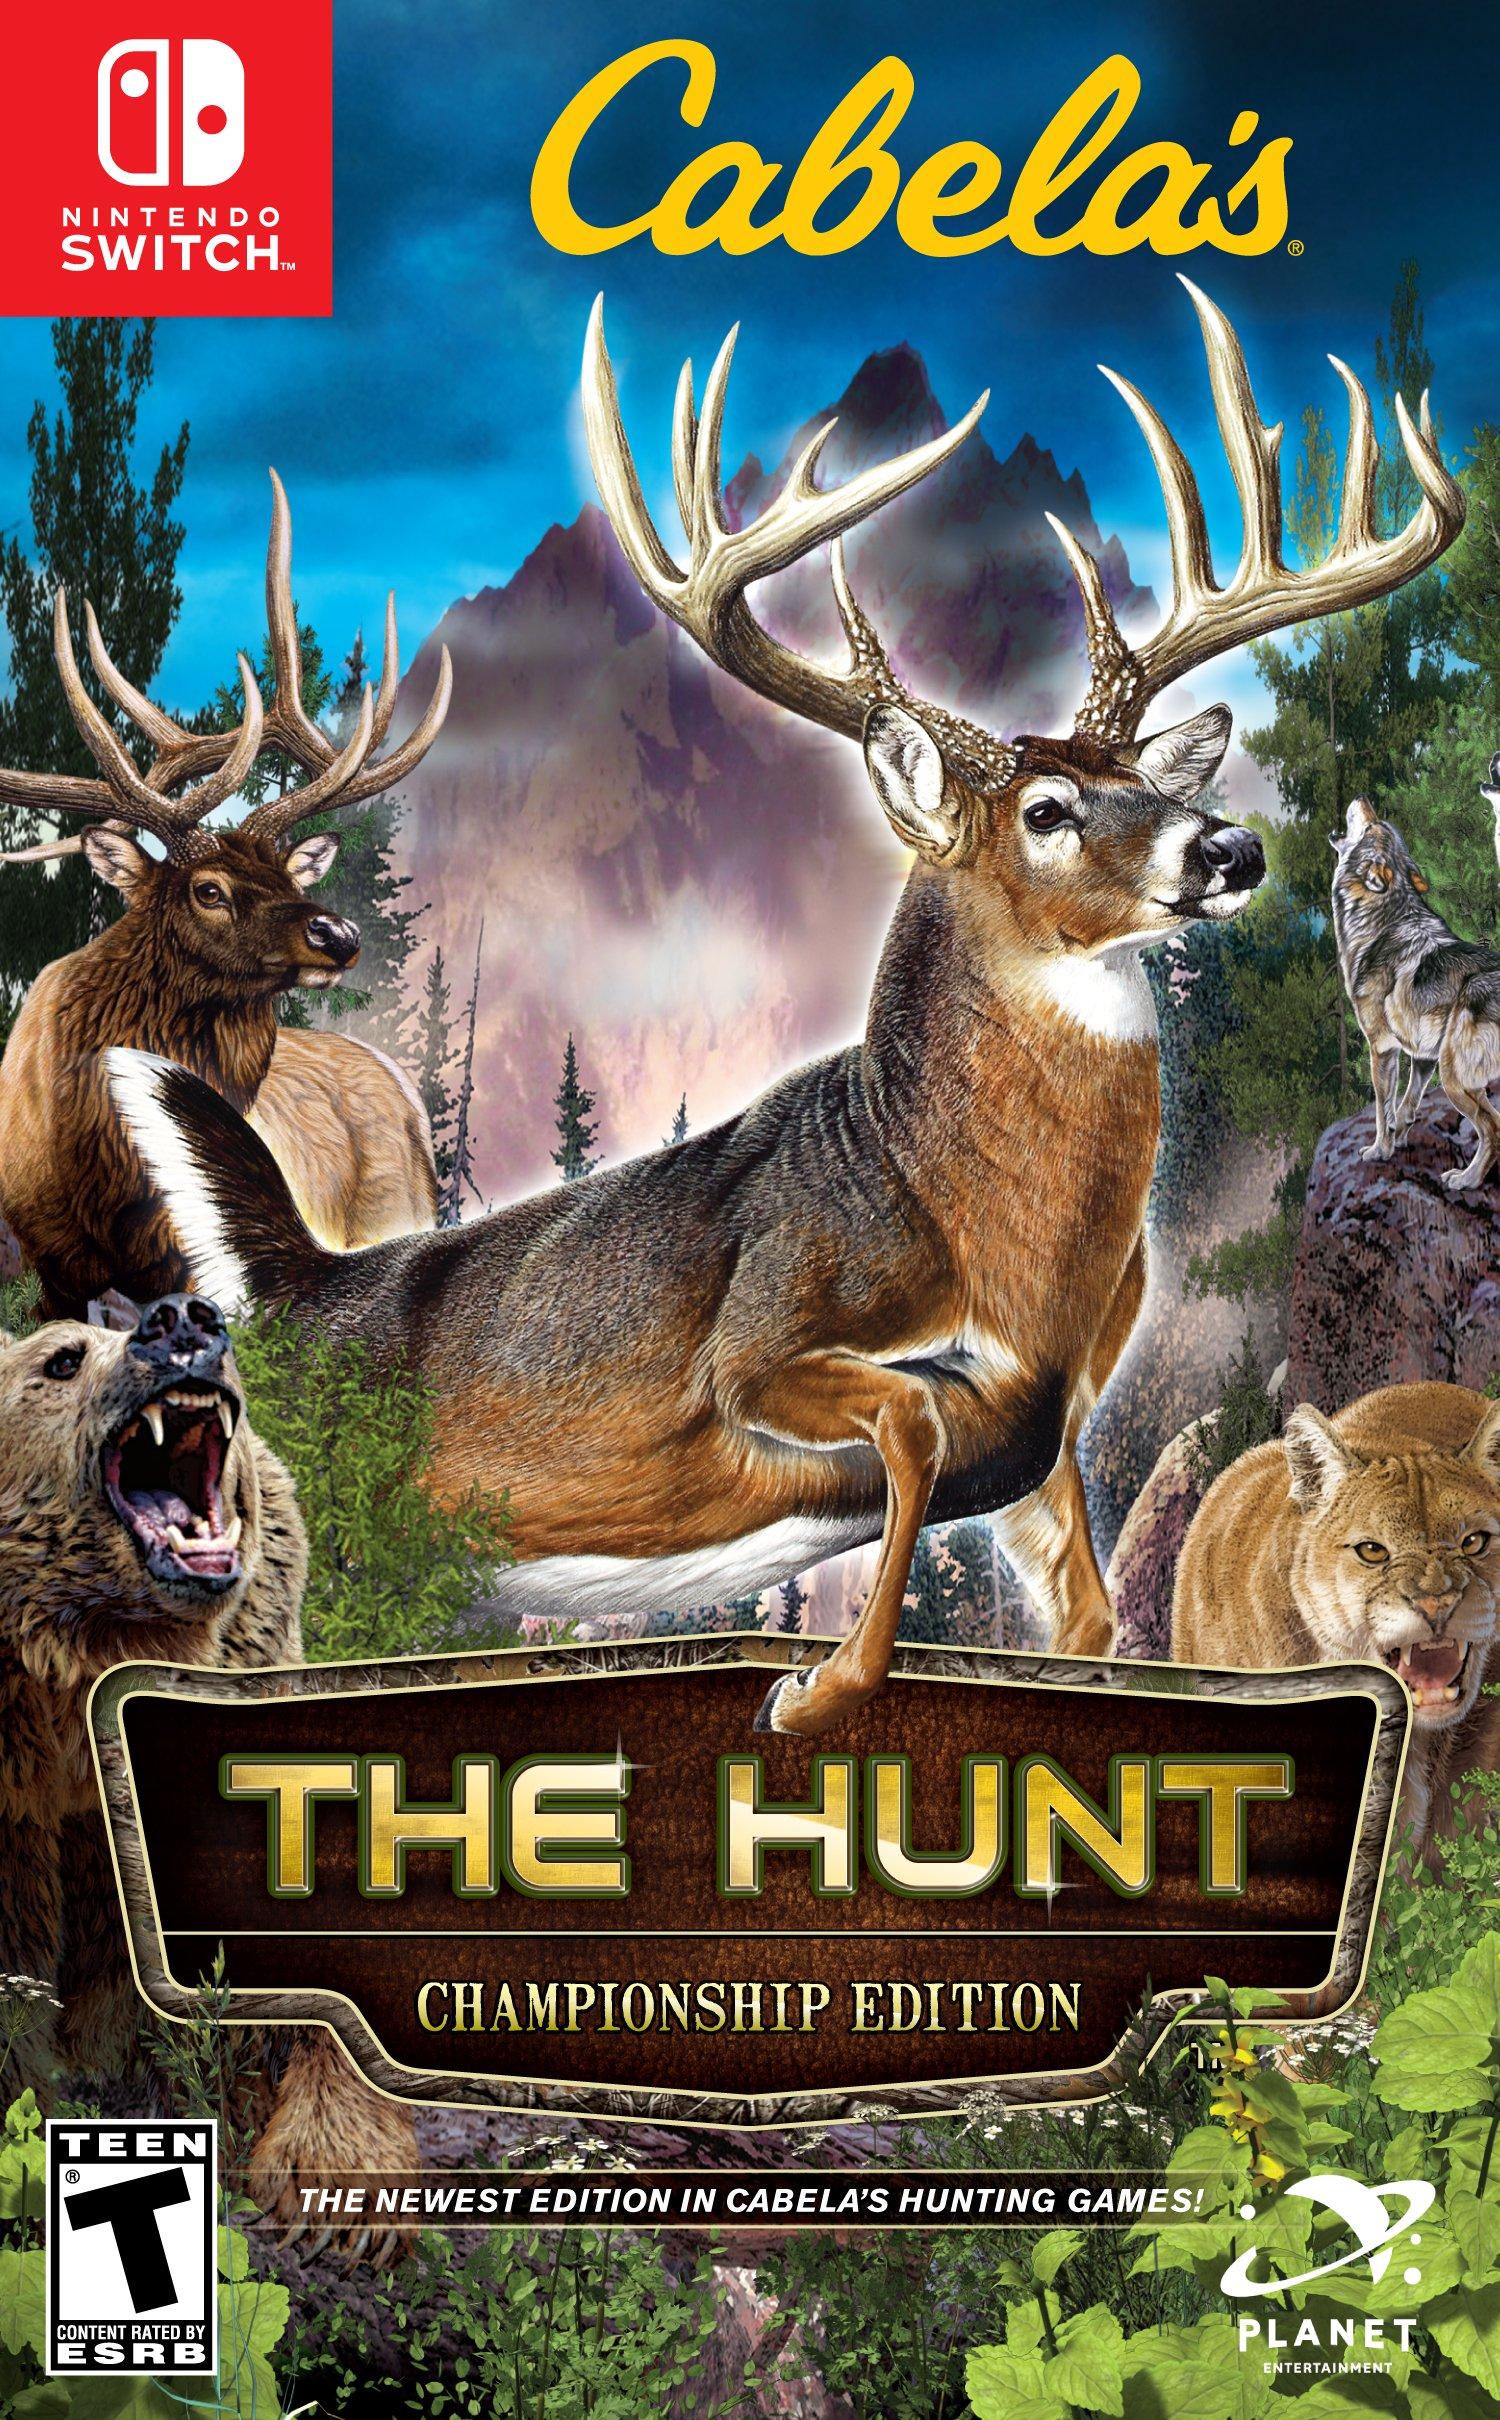 Cabelas The Hunt Championship Edition